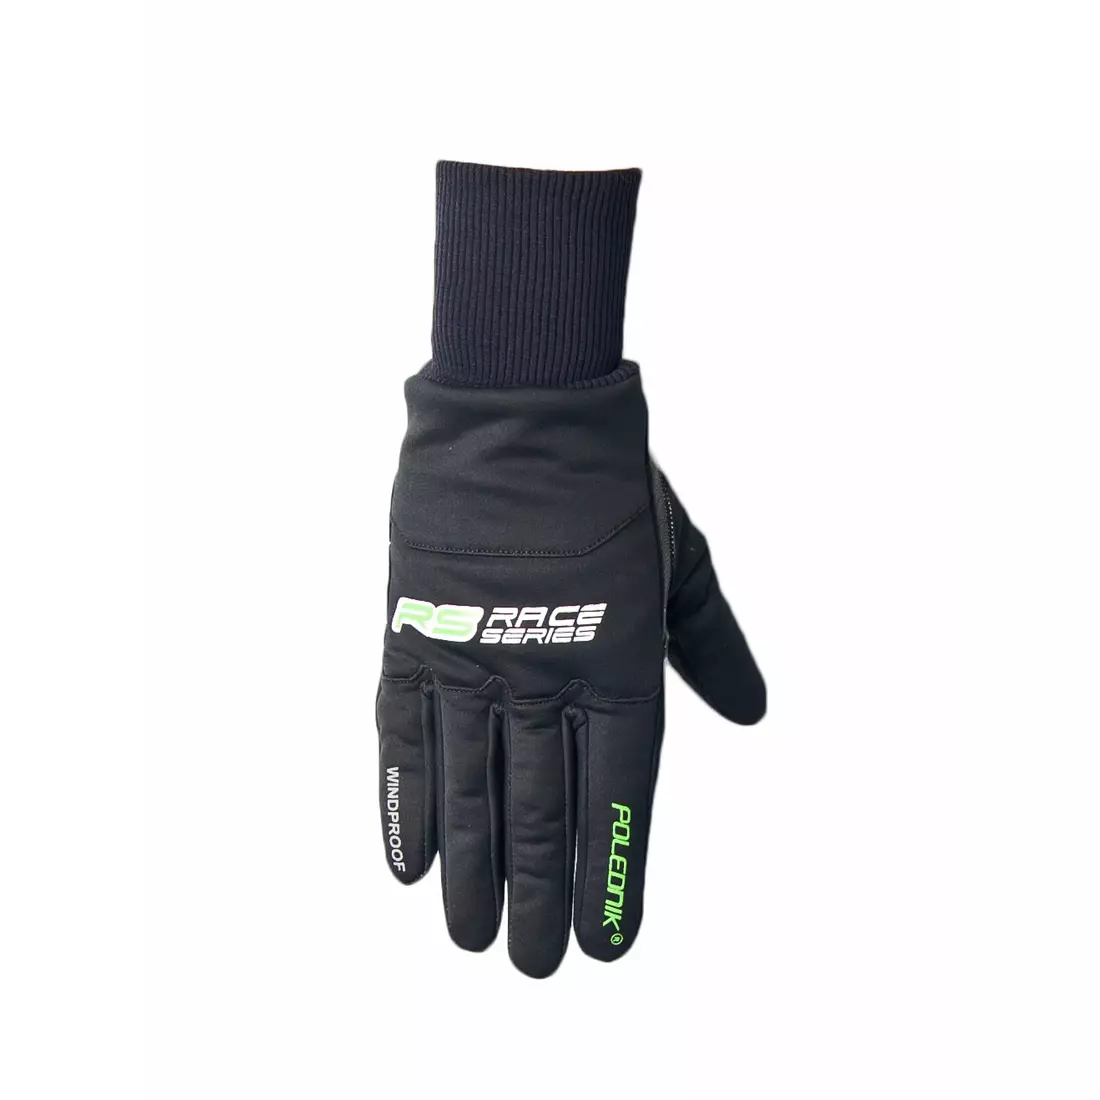 POLEDNIK winter cycling gloves RSW, color: black